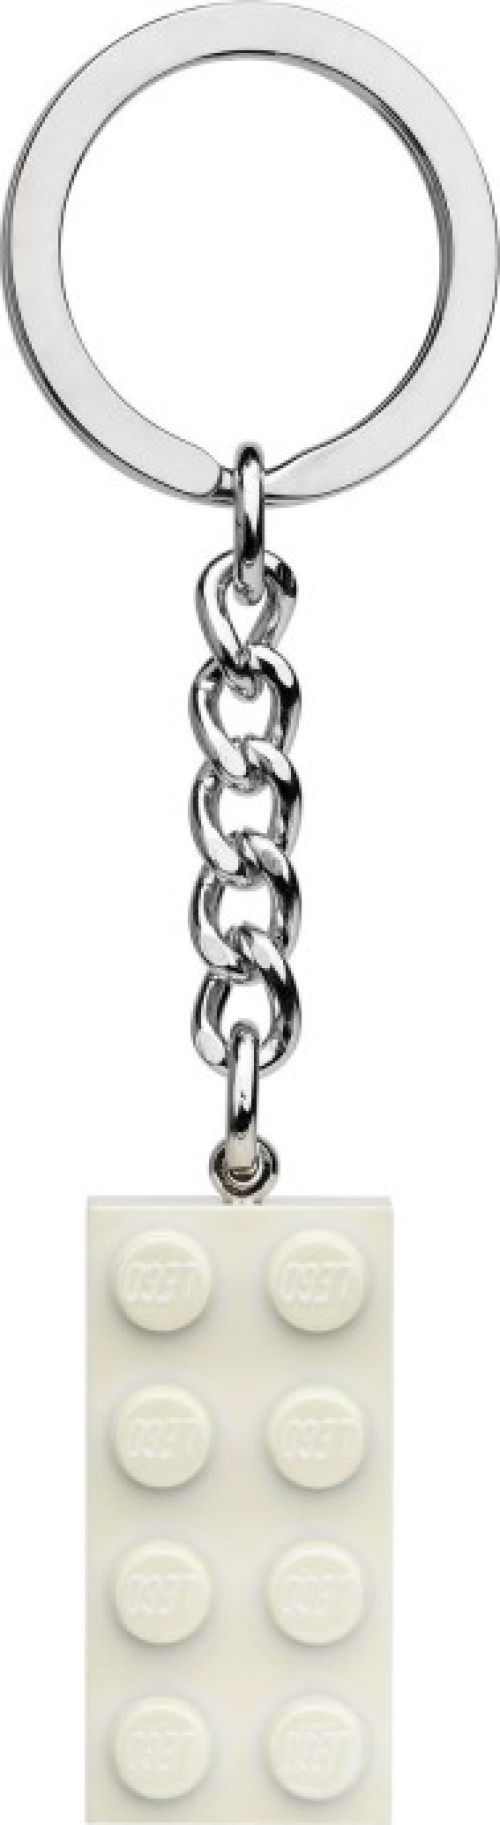 854084-1 2x4 White Metallic Key Chain